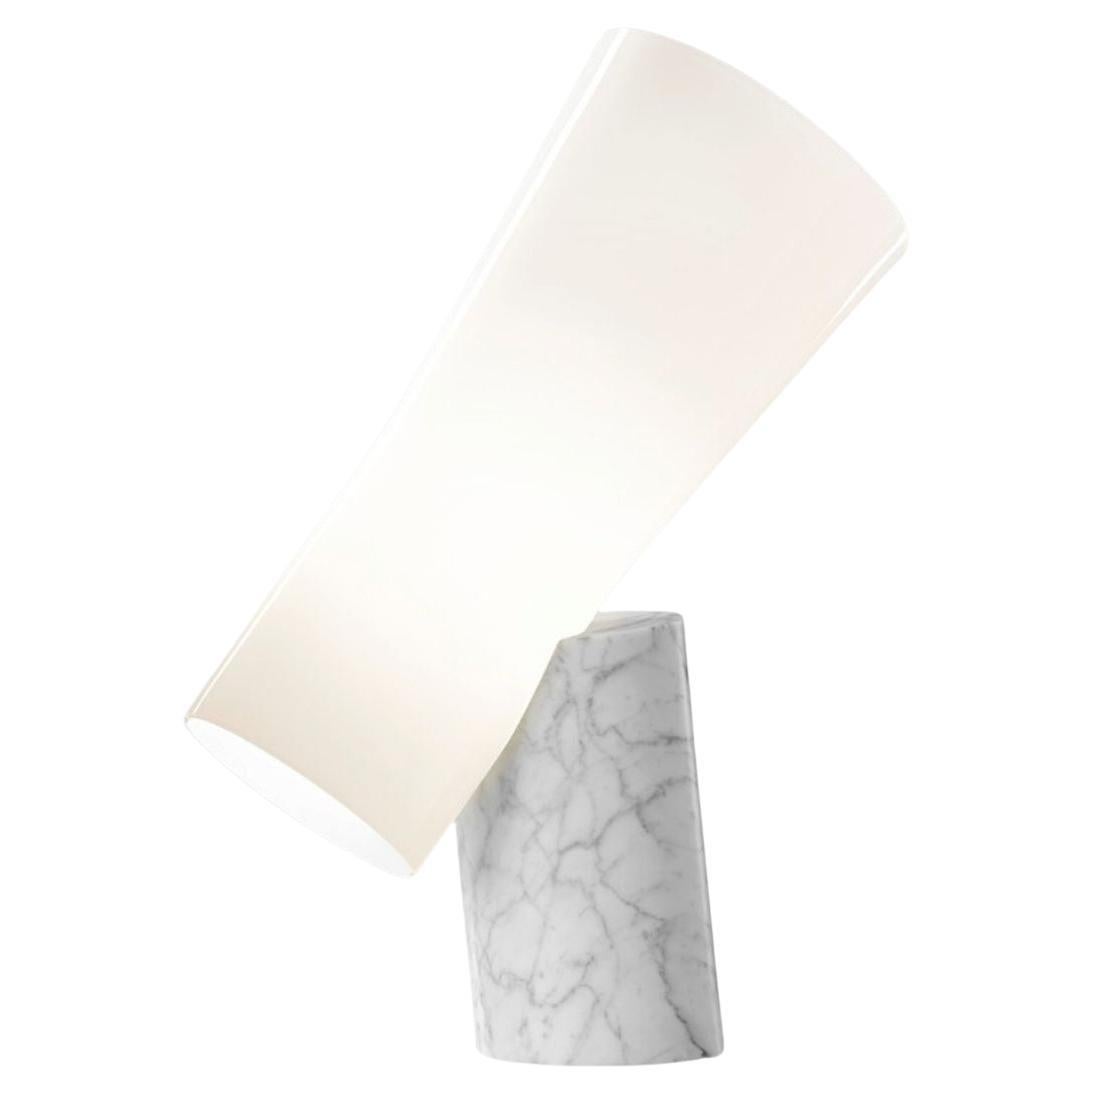 Dordoni ‘Nile’ Blown Glass and White Carrara Marble Table Lamp For Foscarini For Sale